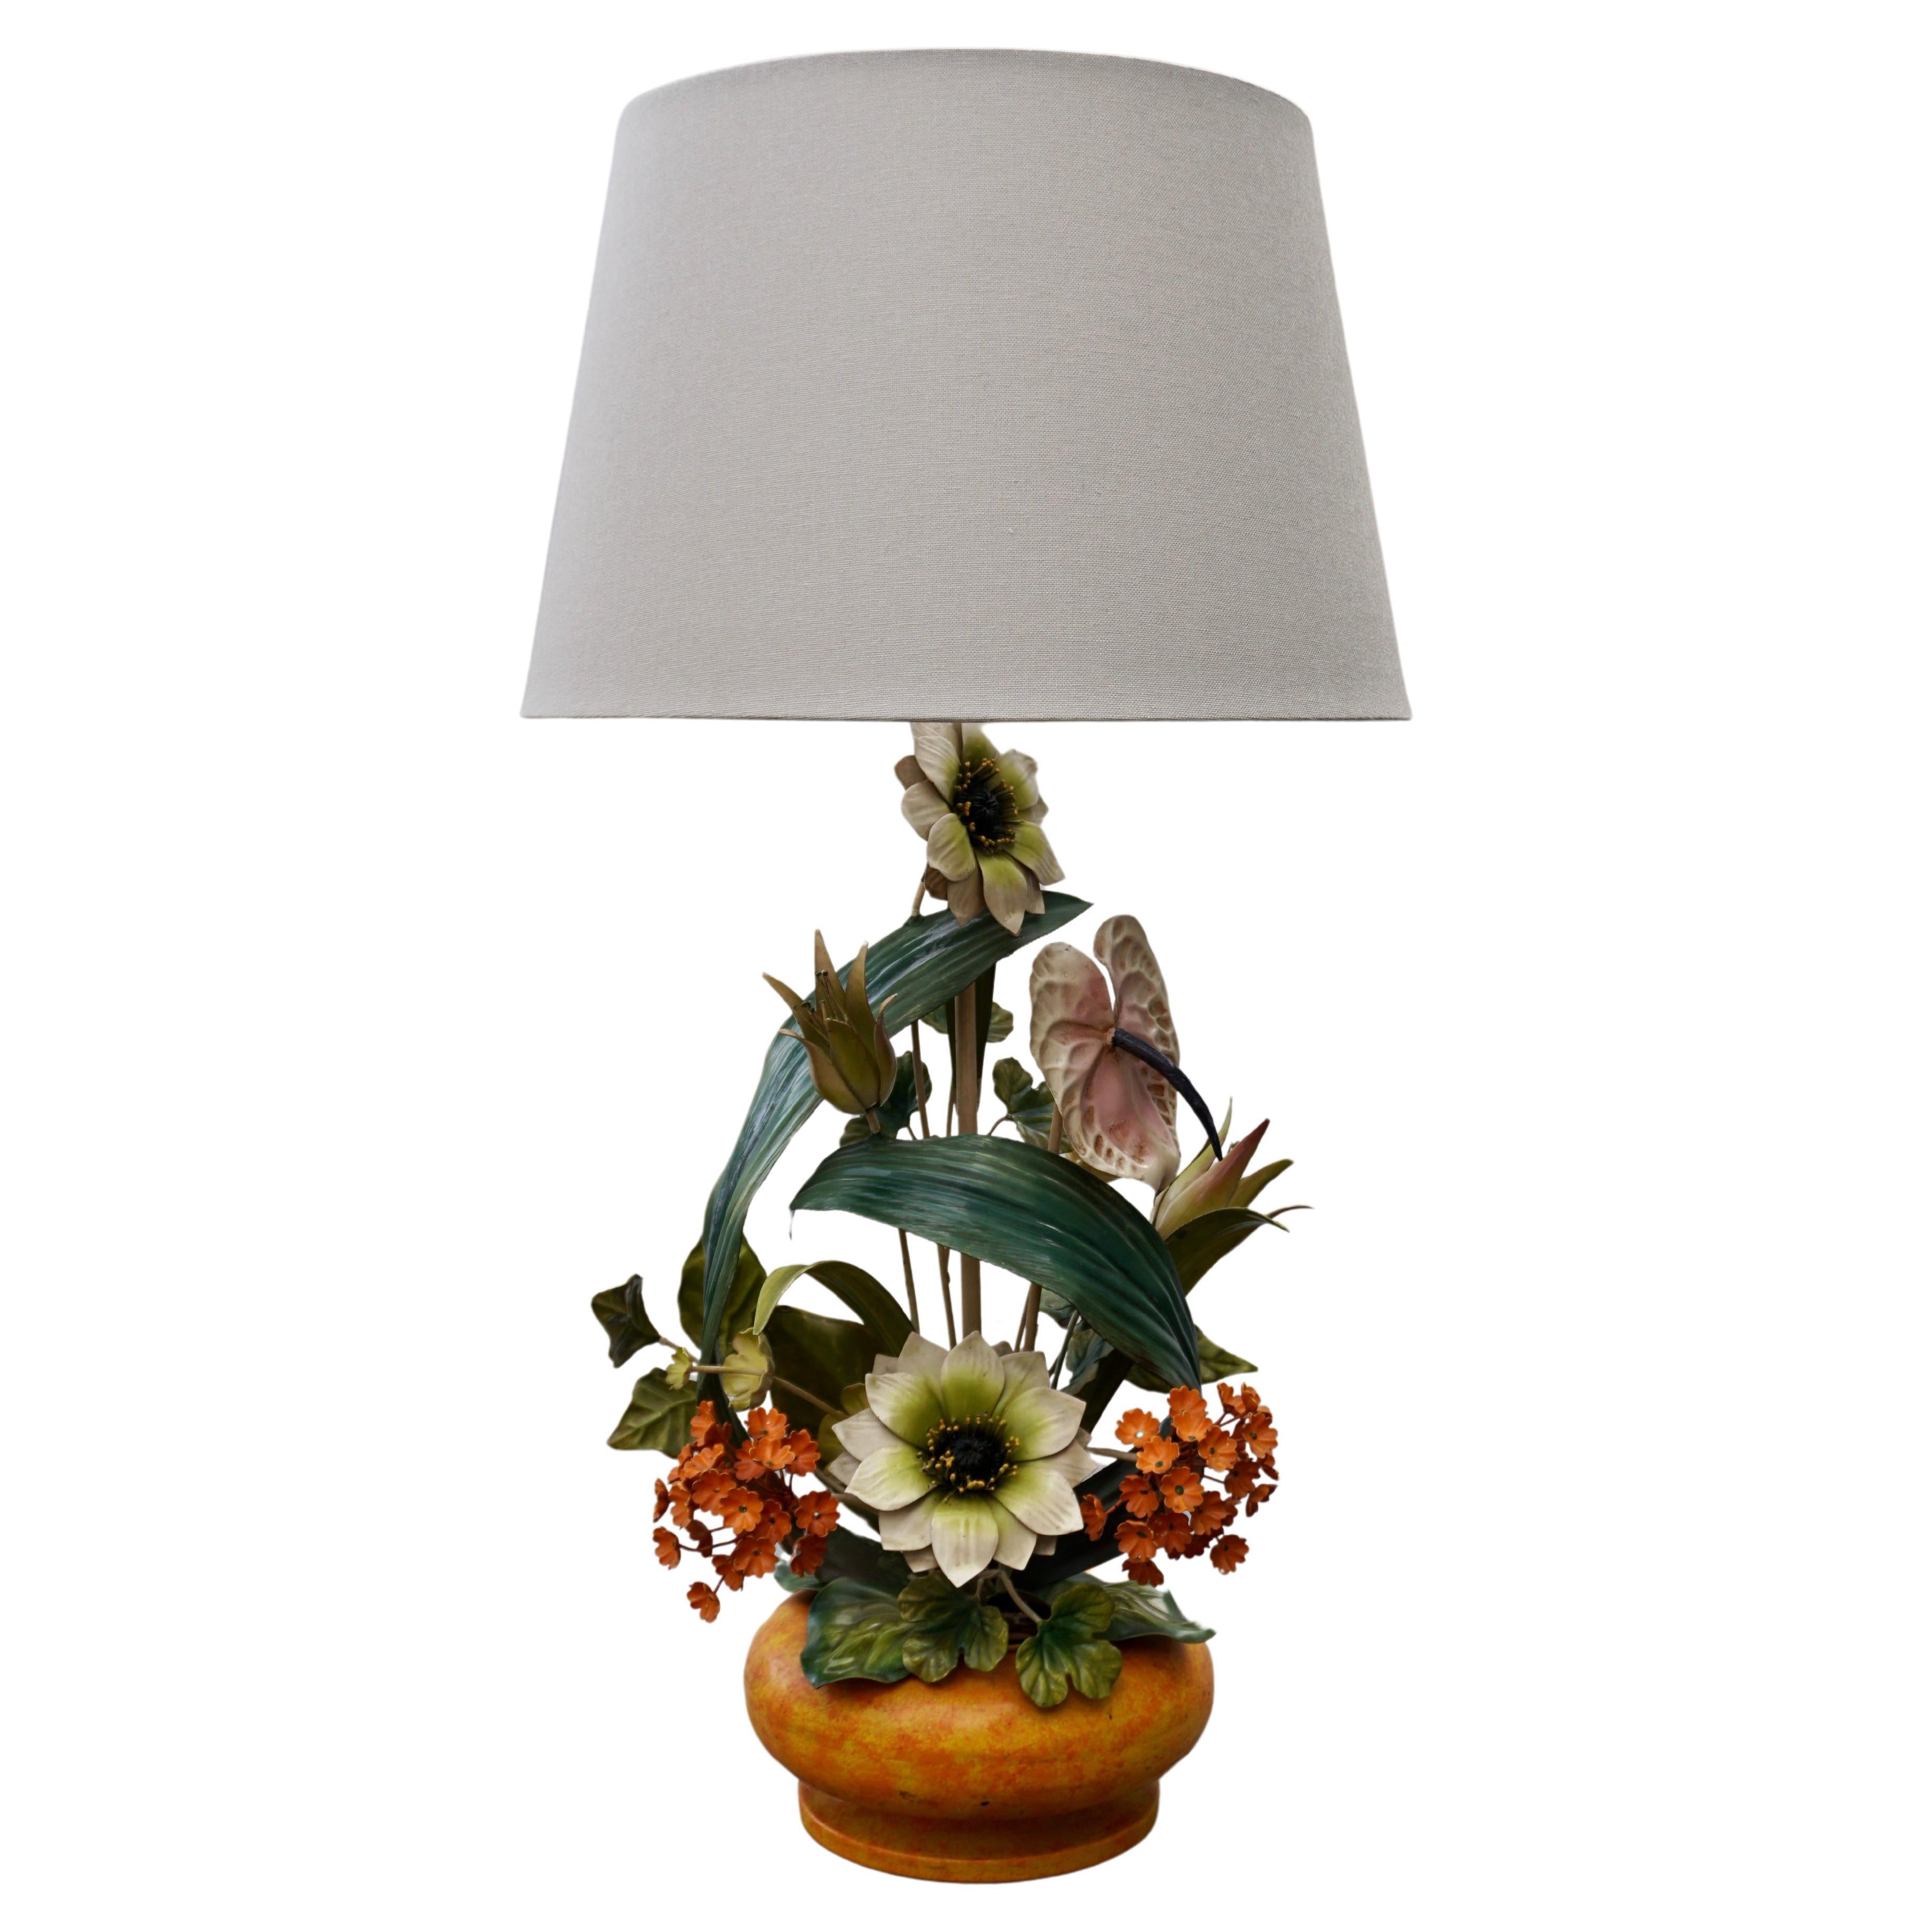 Vintage Tole Toleware Metal Art Flower Petite Lampe Italien Shabby Chic